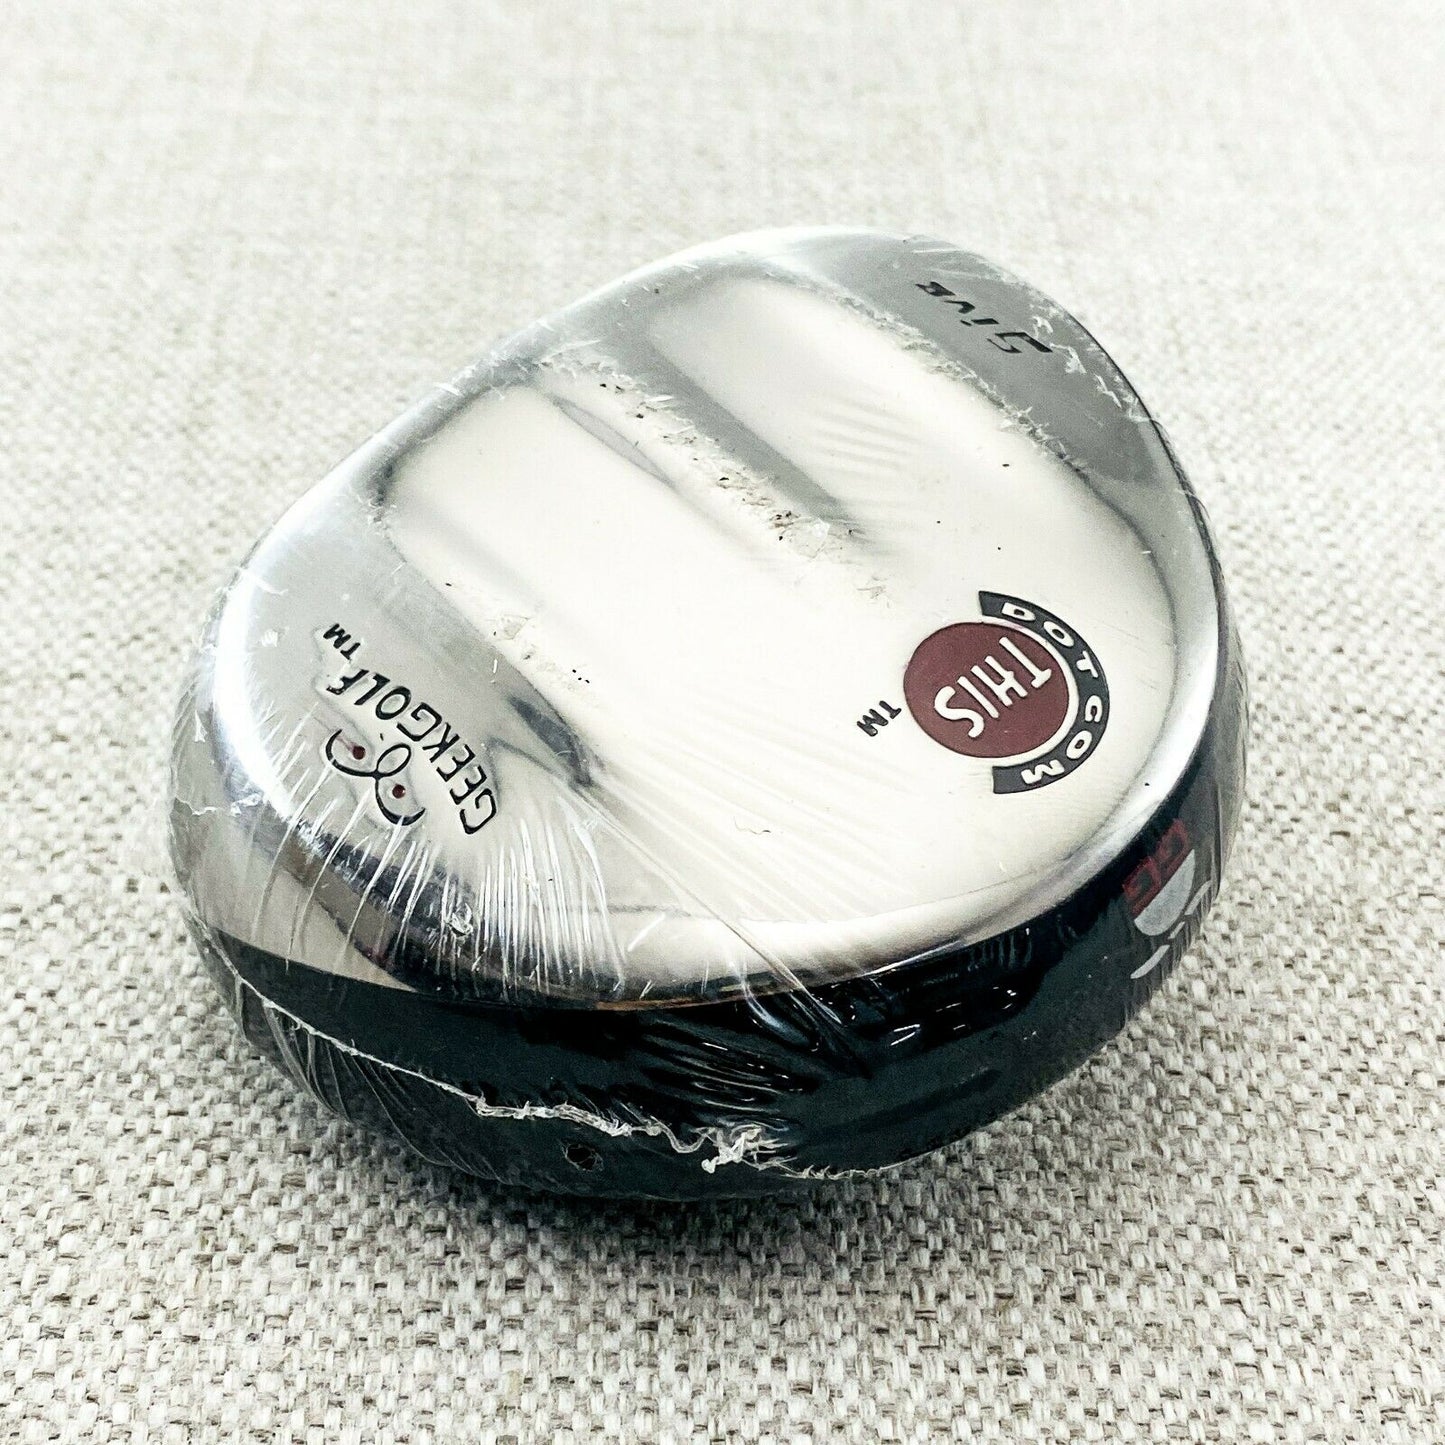 GEEK Golf Dot Com This 5-Wood Head. 18 Degree - Brand New  # 11709